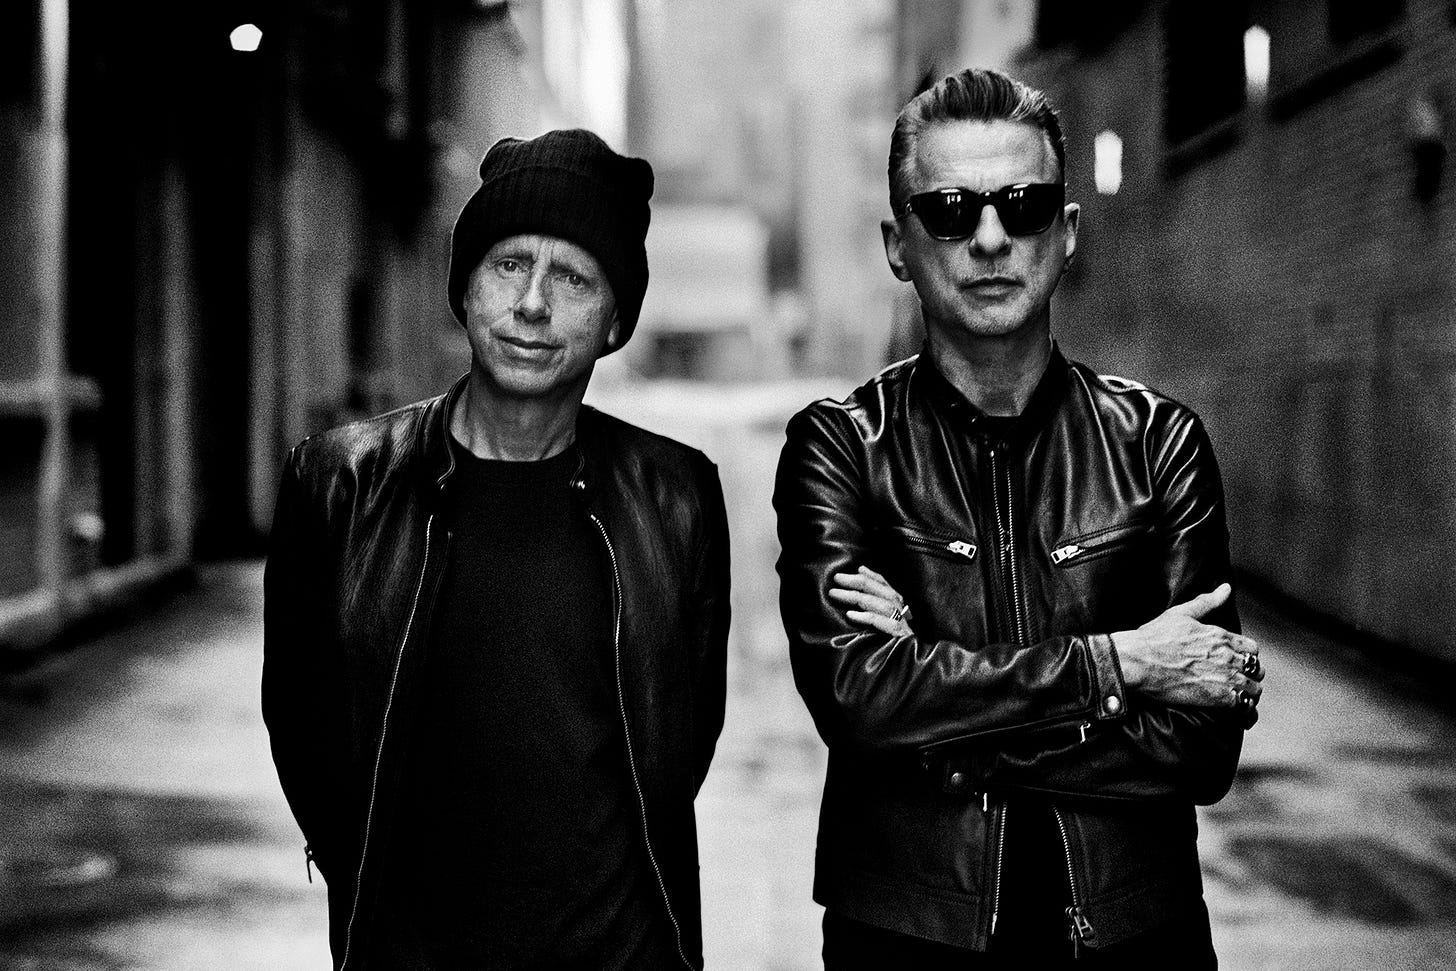 Depeche Mode Return With Tour and New Album 'Memento Mori'